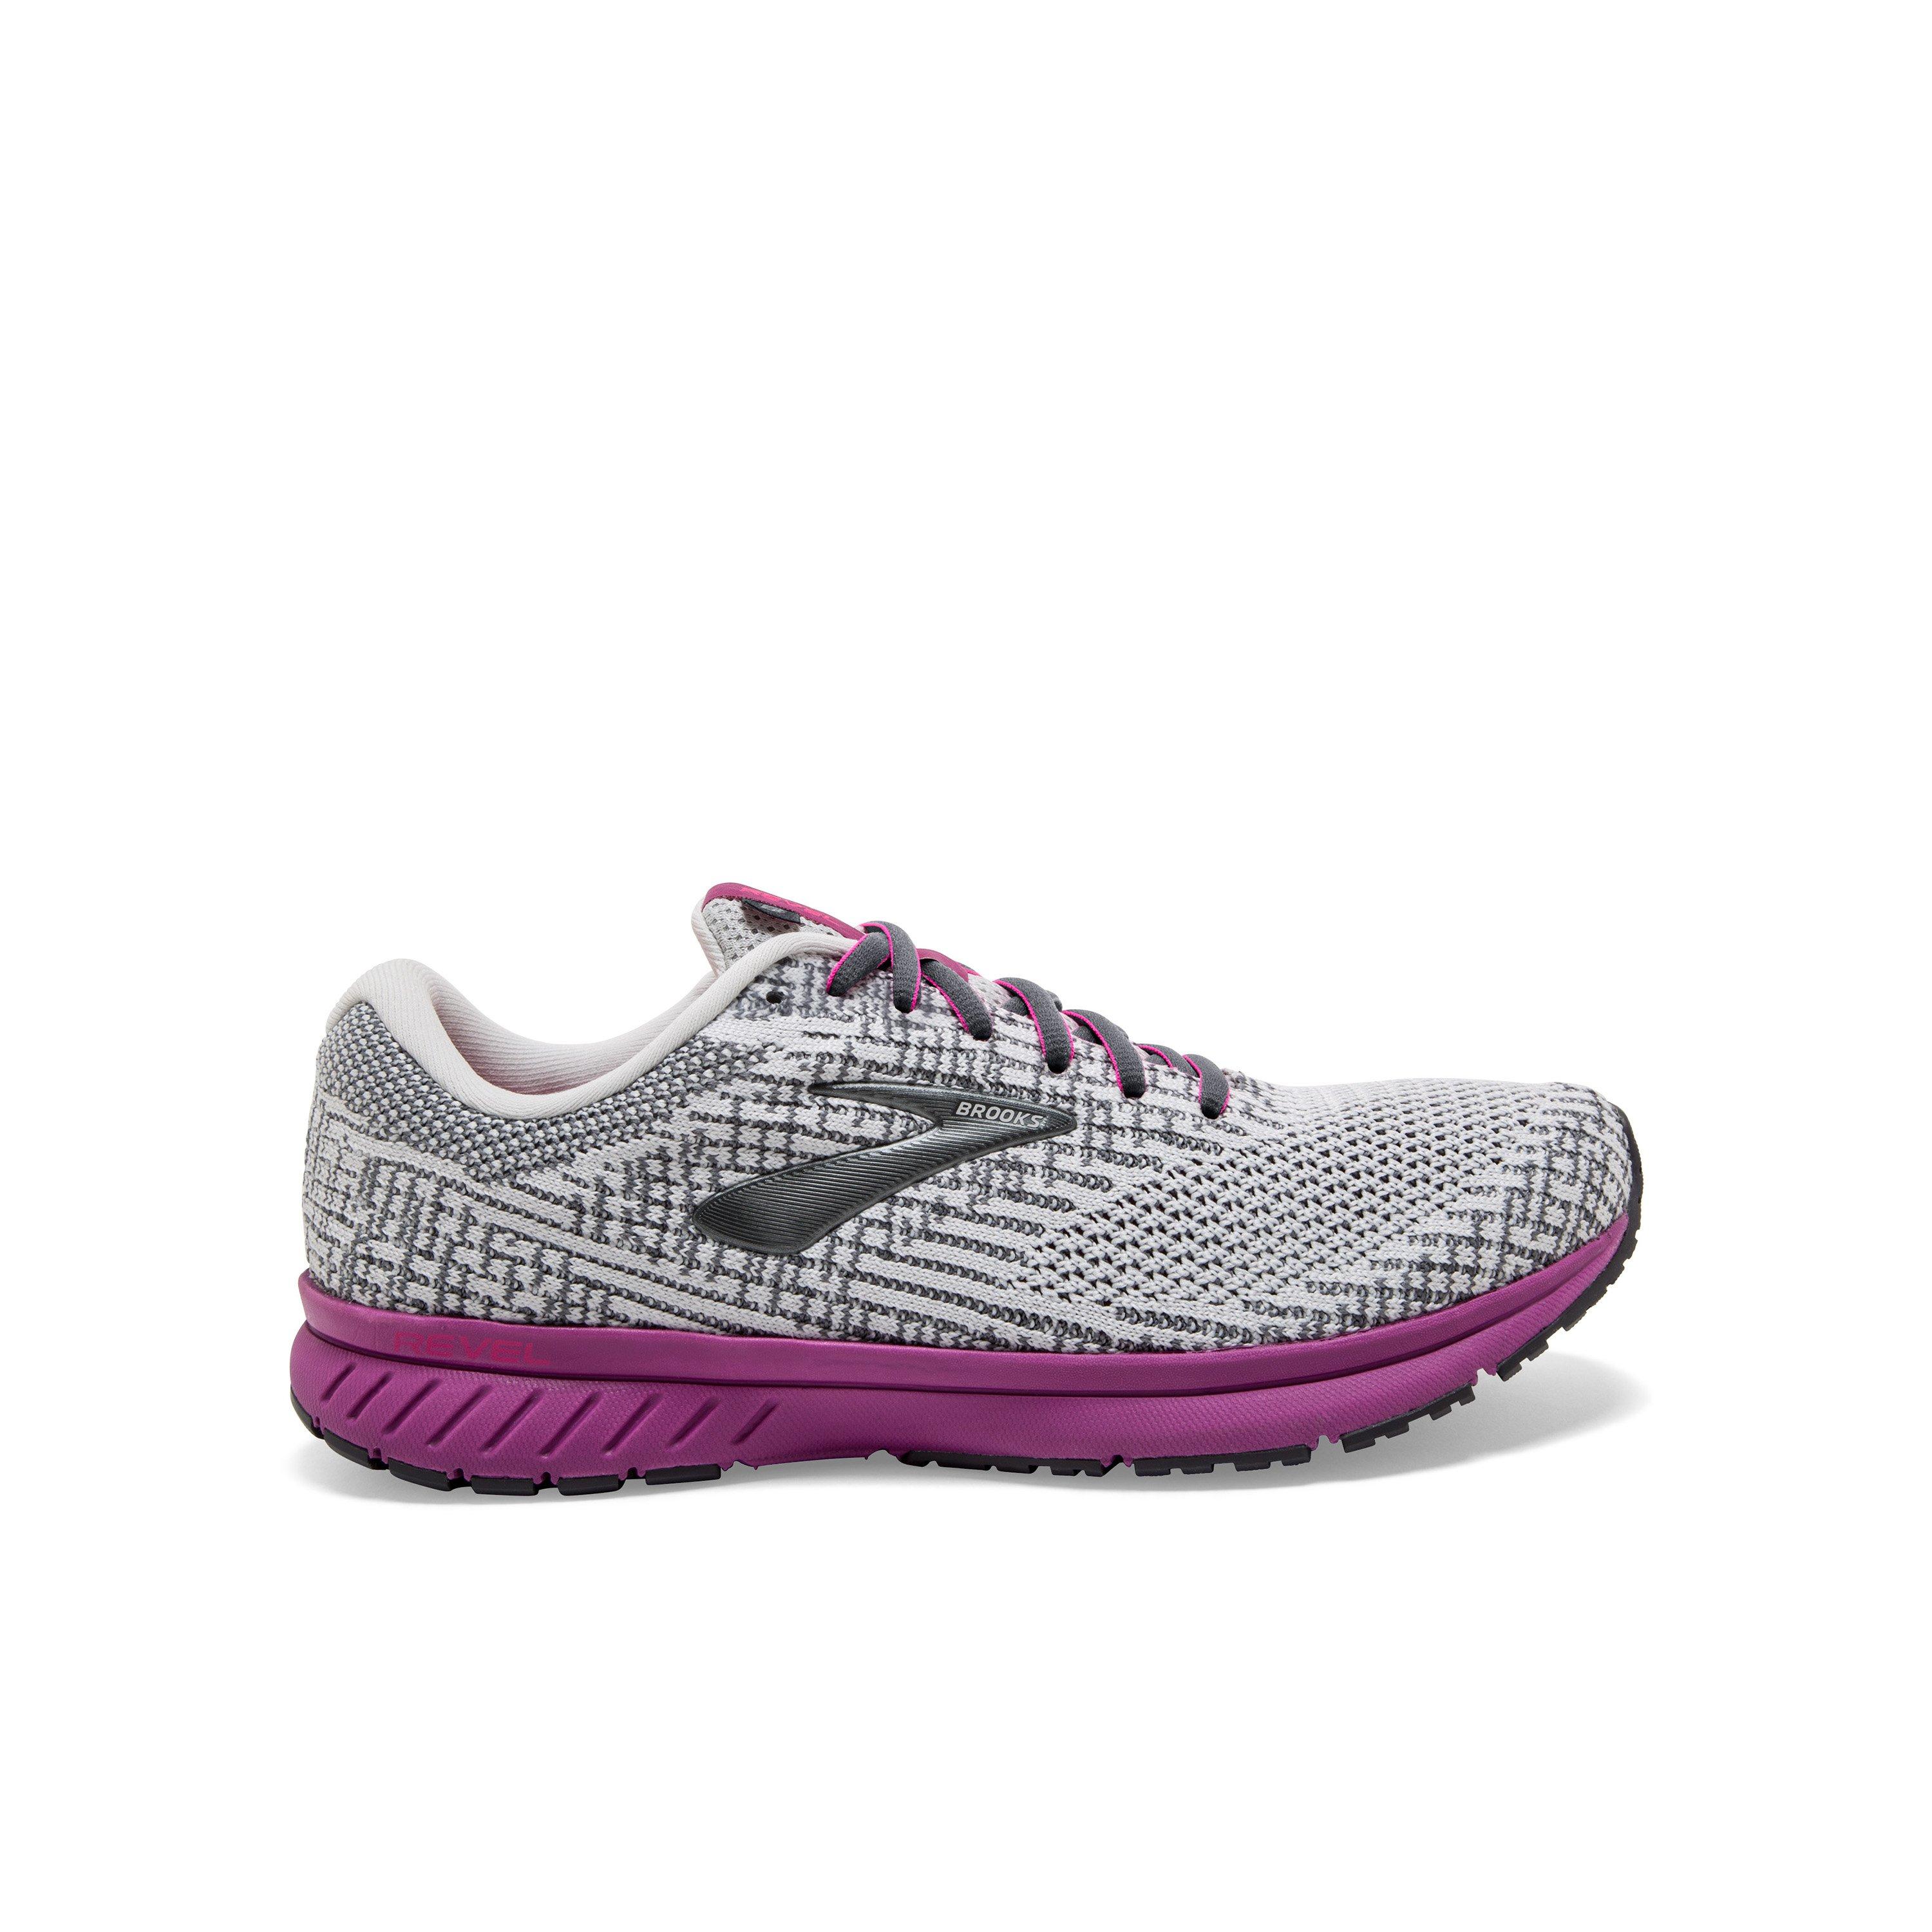 purple brooks running shoes